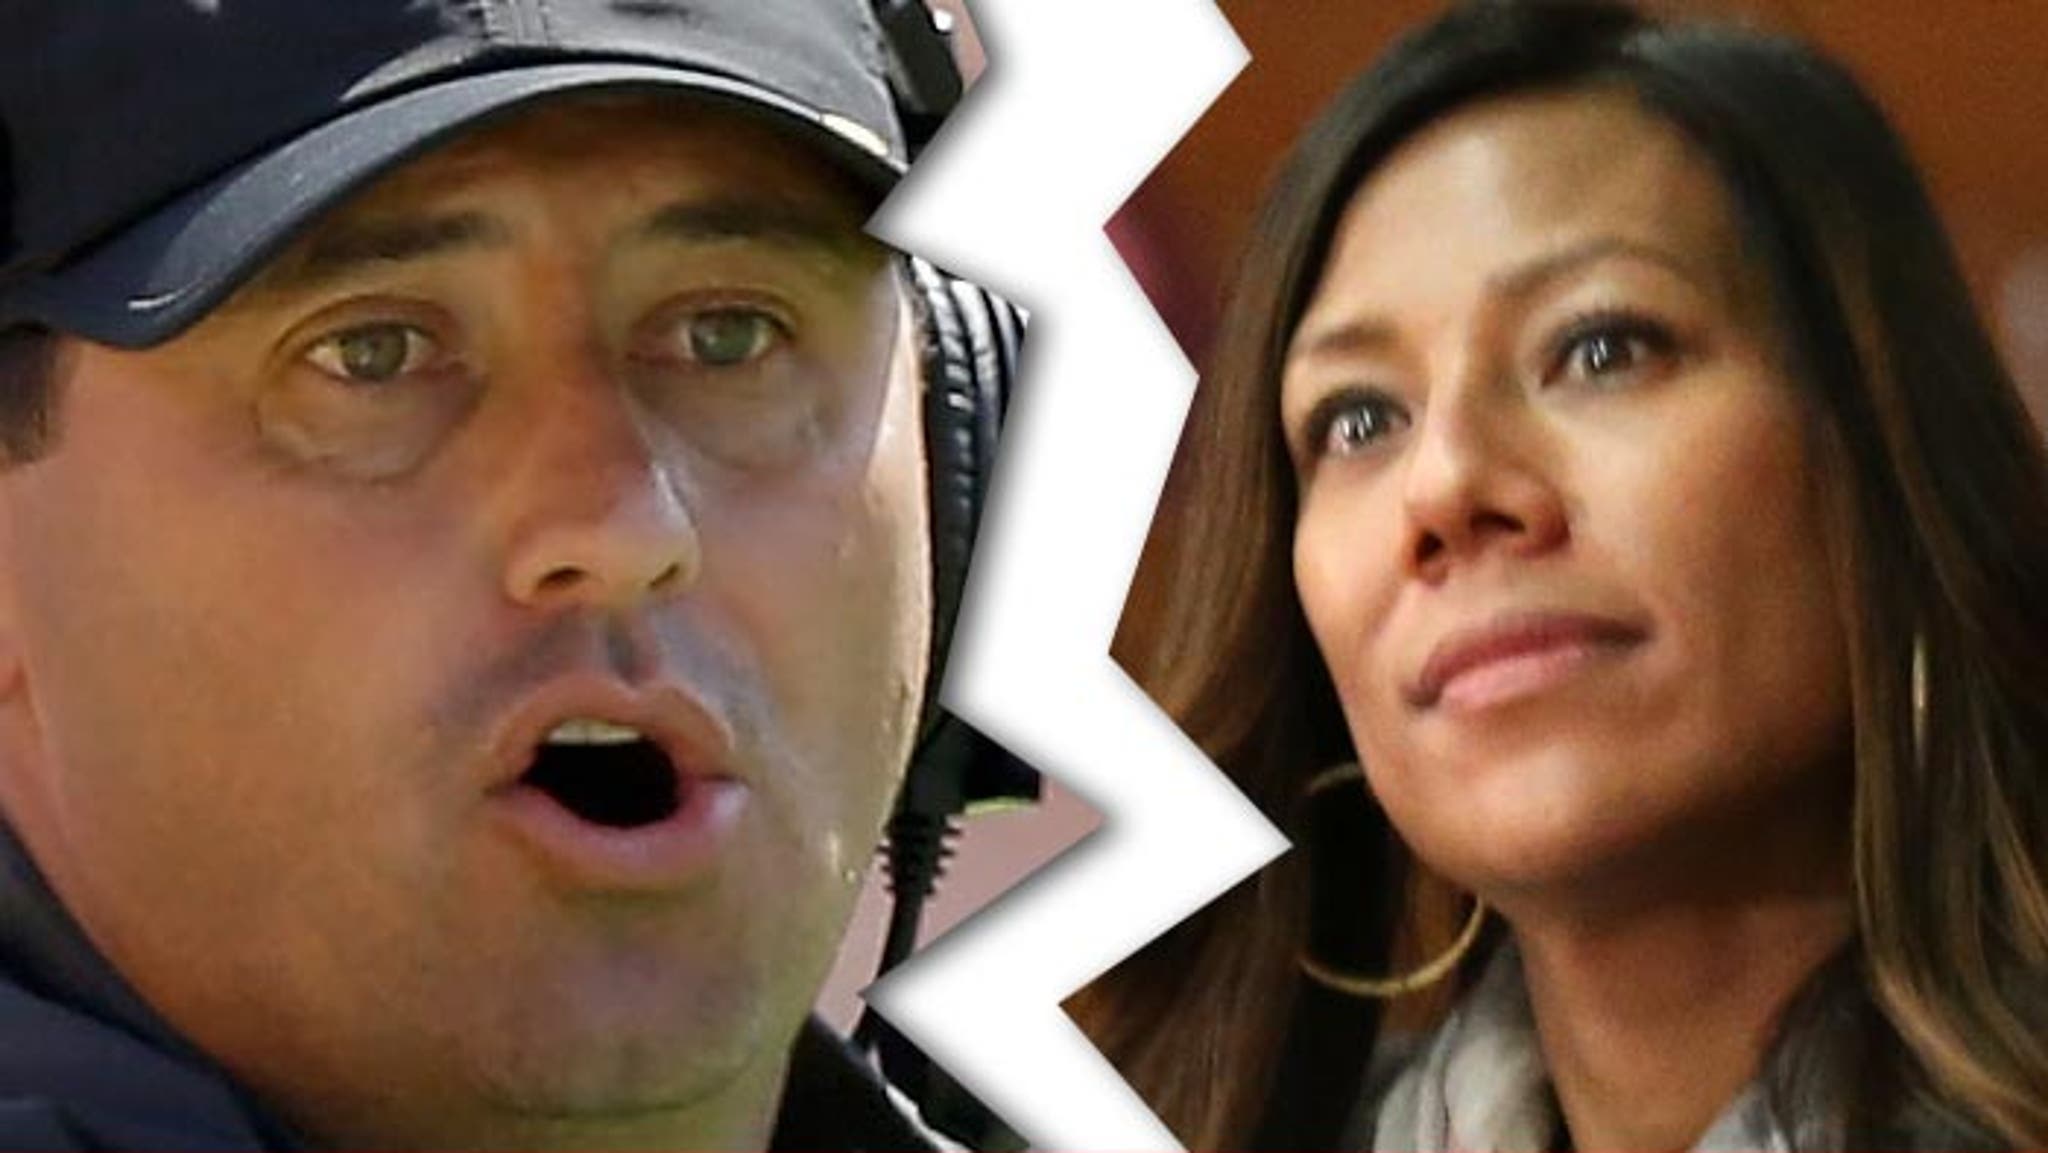 Steve Sarkisian Usc Football Coach S Wife Files For Divorce